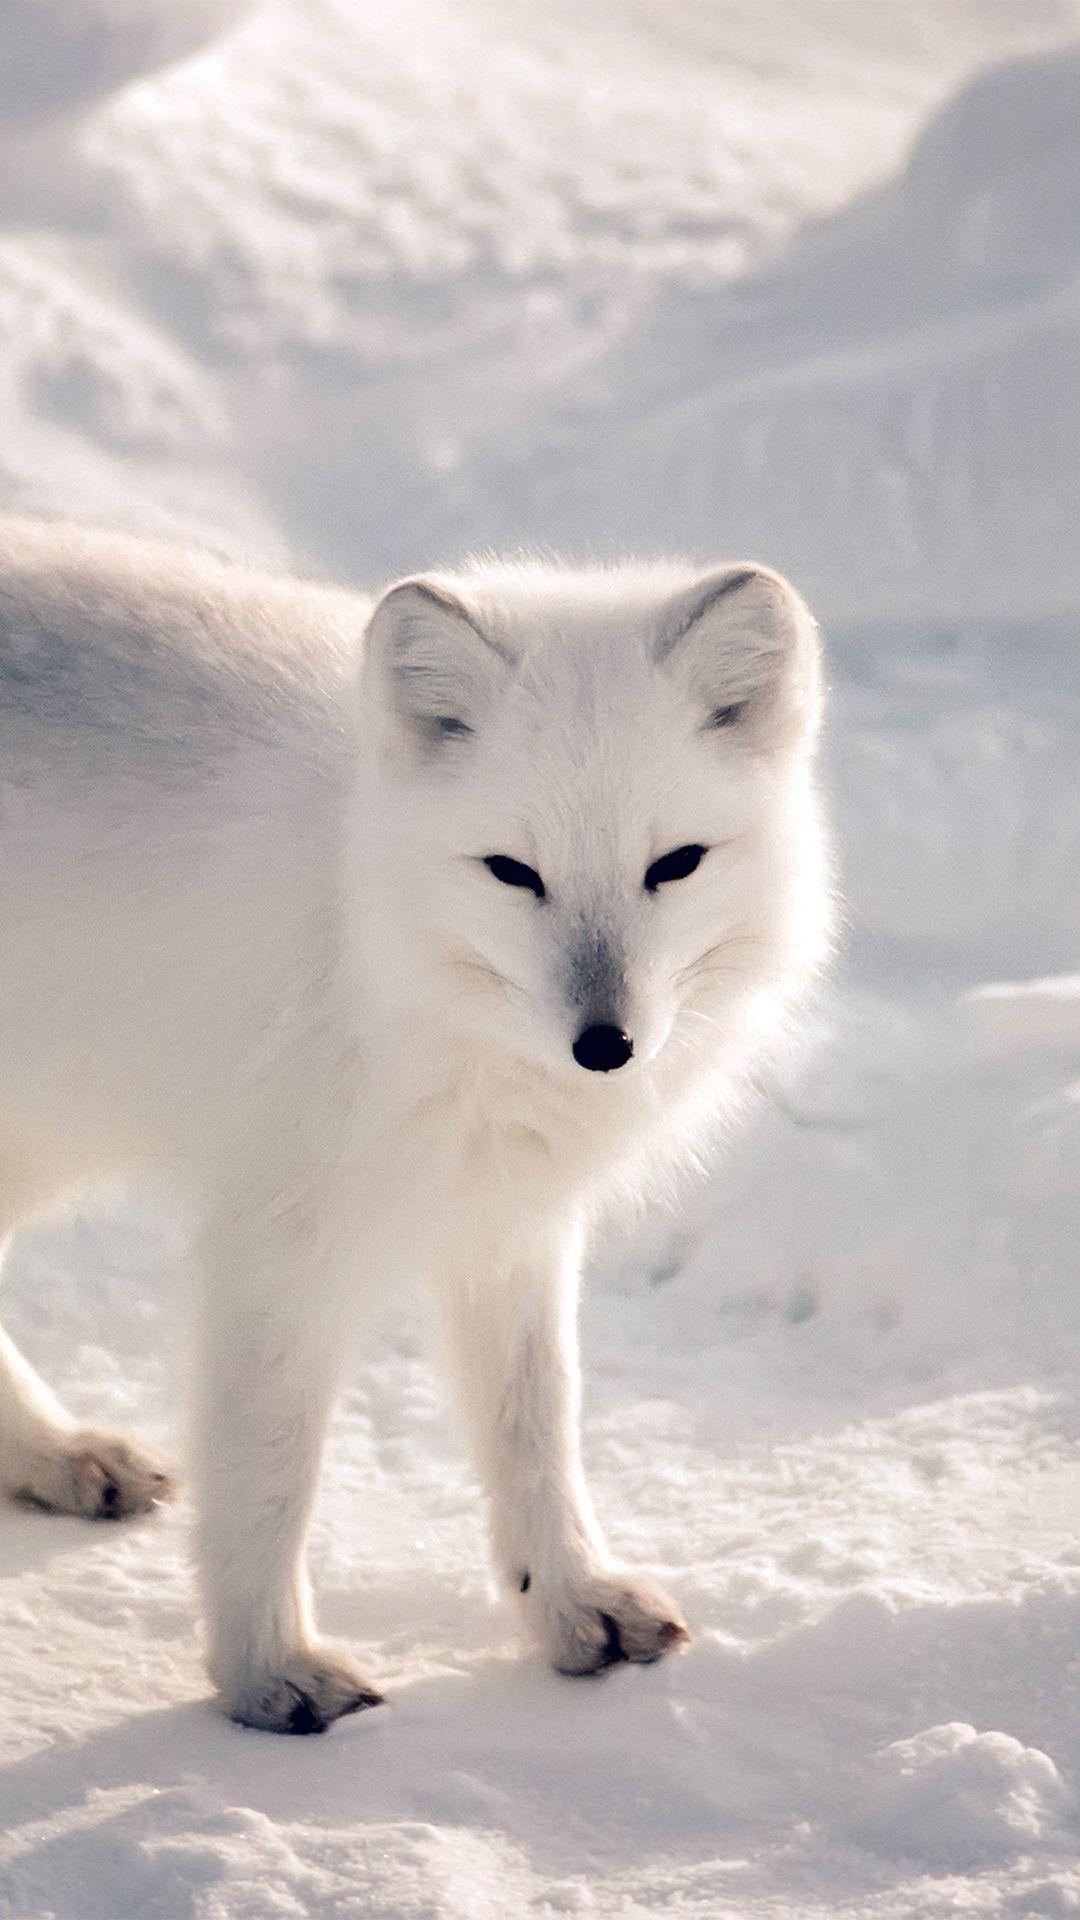 White Artic Fox Snow Winter Animal IPhone 6 Wallpaper Download. IPhone Wallpaper, IPad Wallpaper One Stop Downloa. Snow Animals, Winter Animals, Arctic Animals